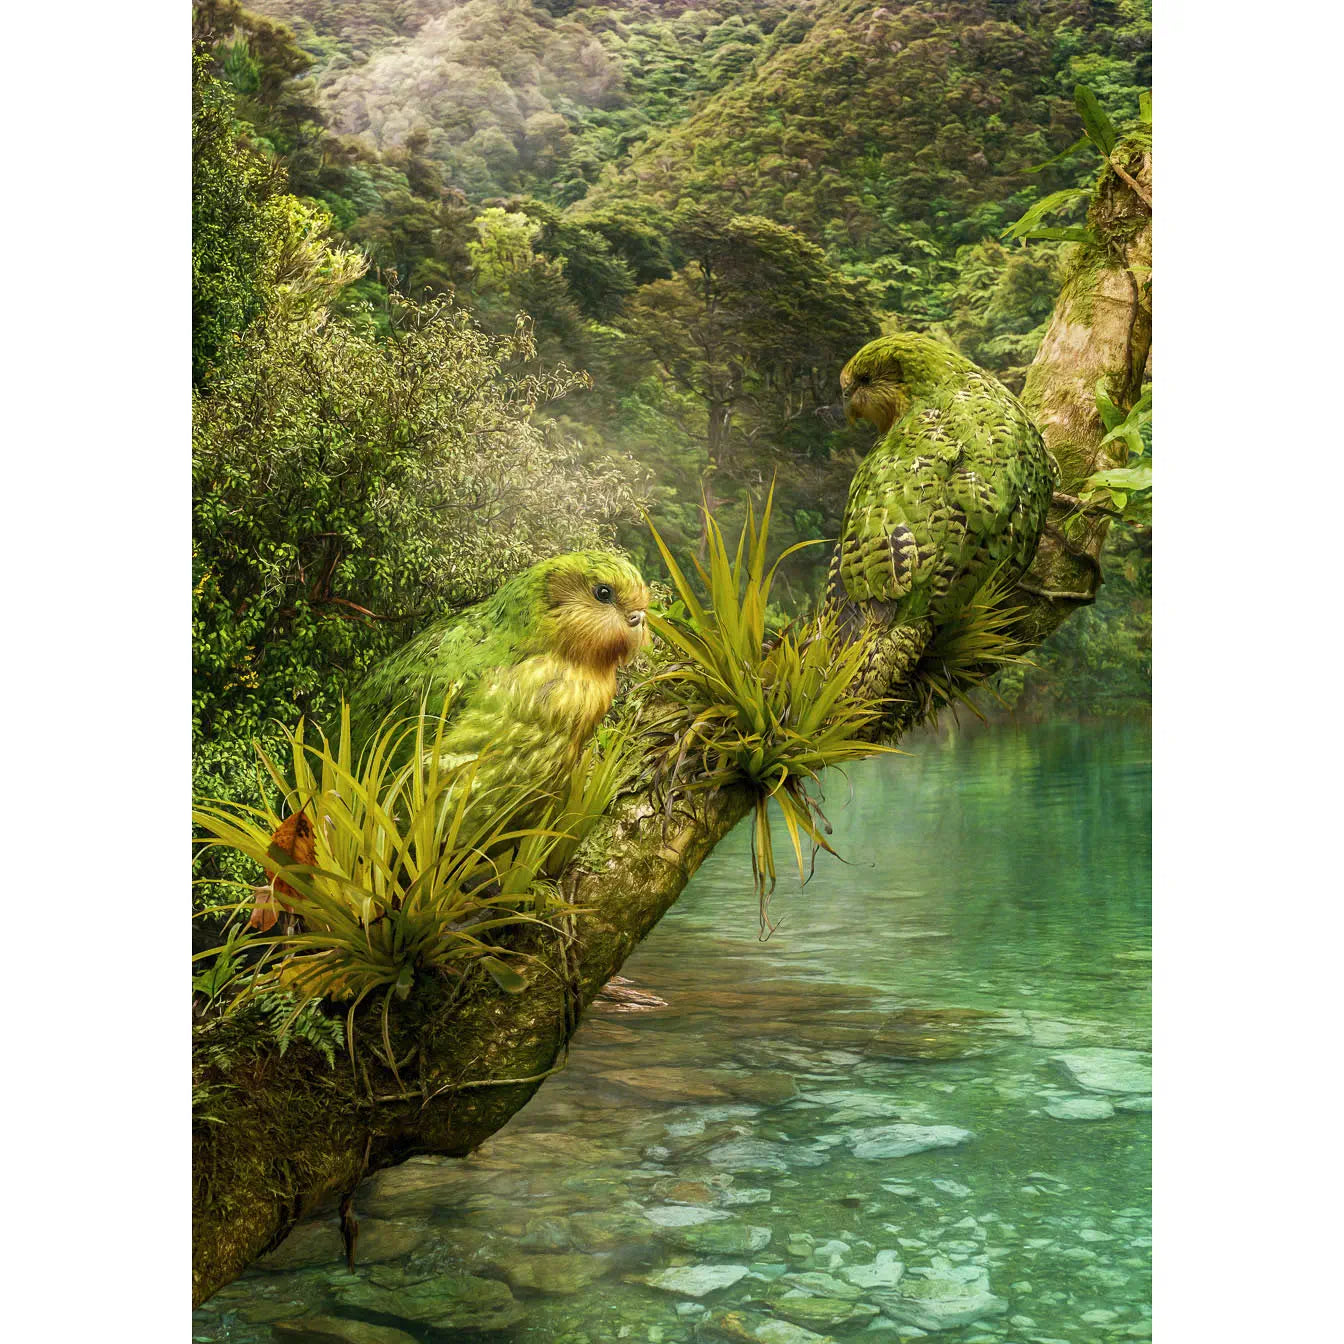 picture of two kakapo 